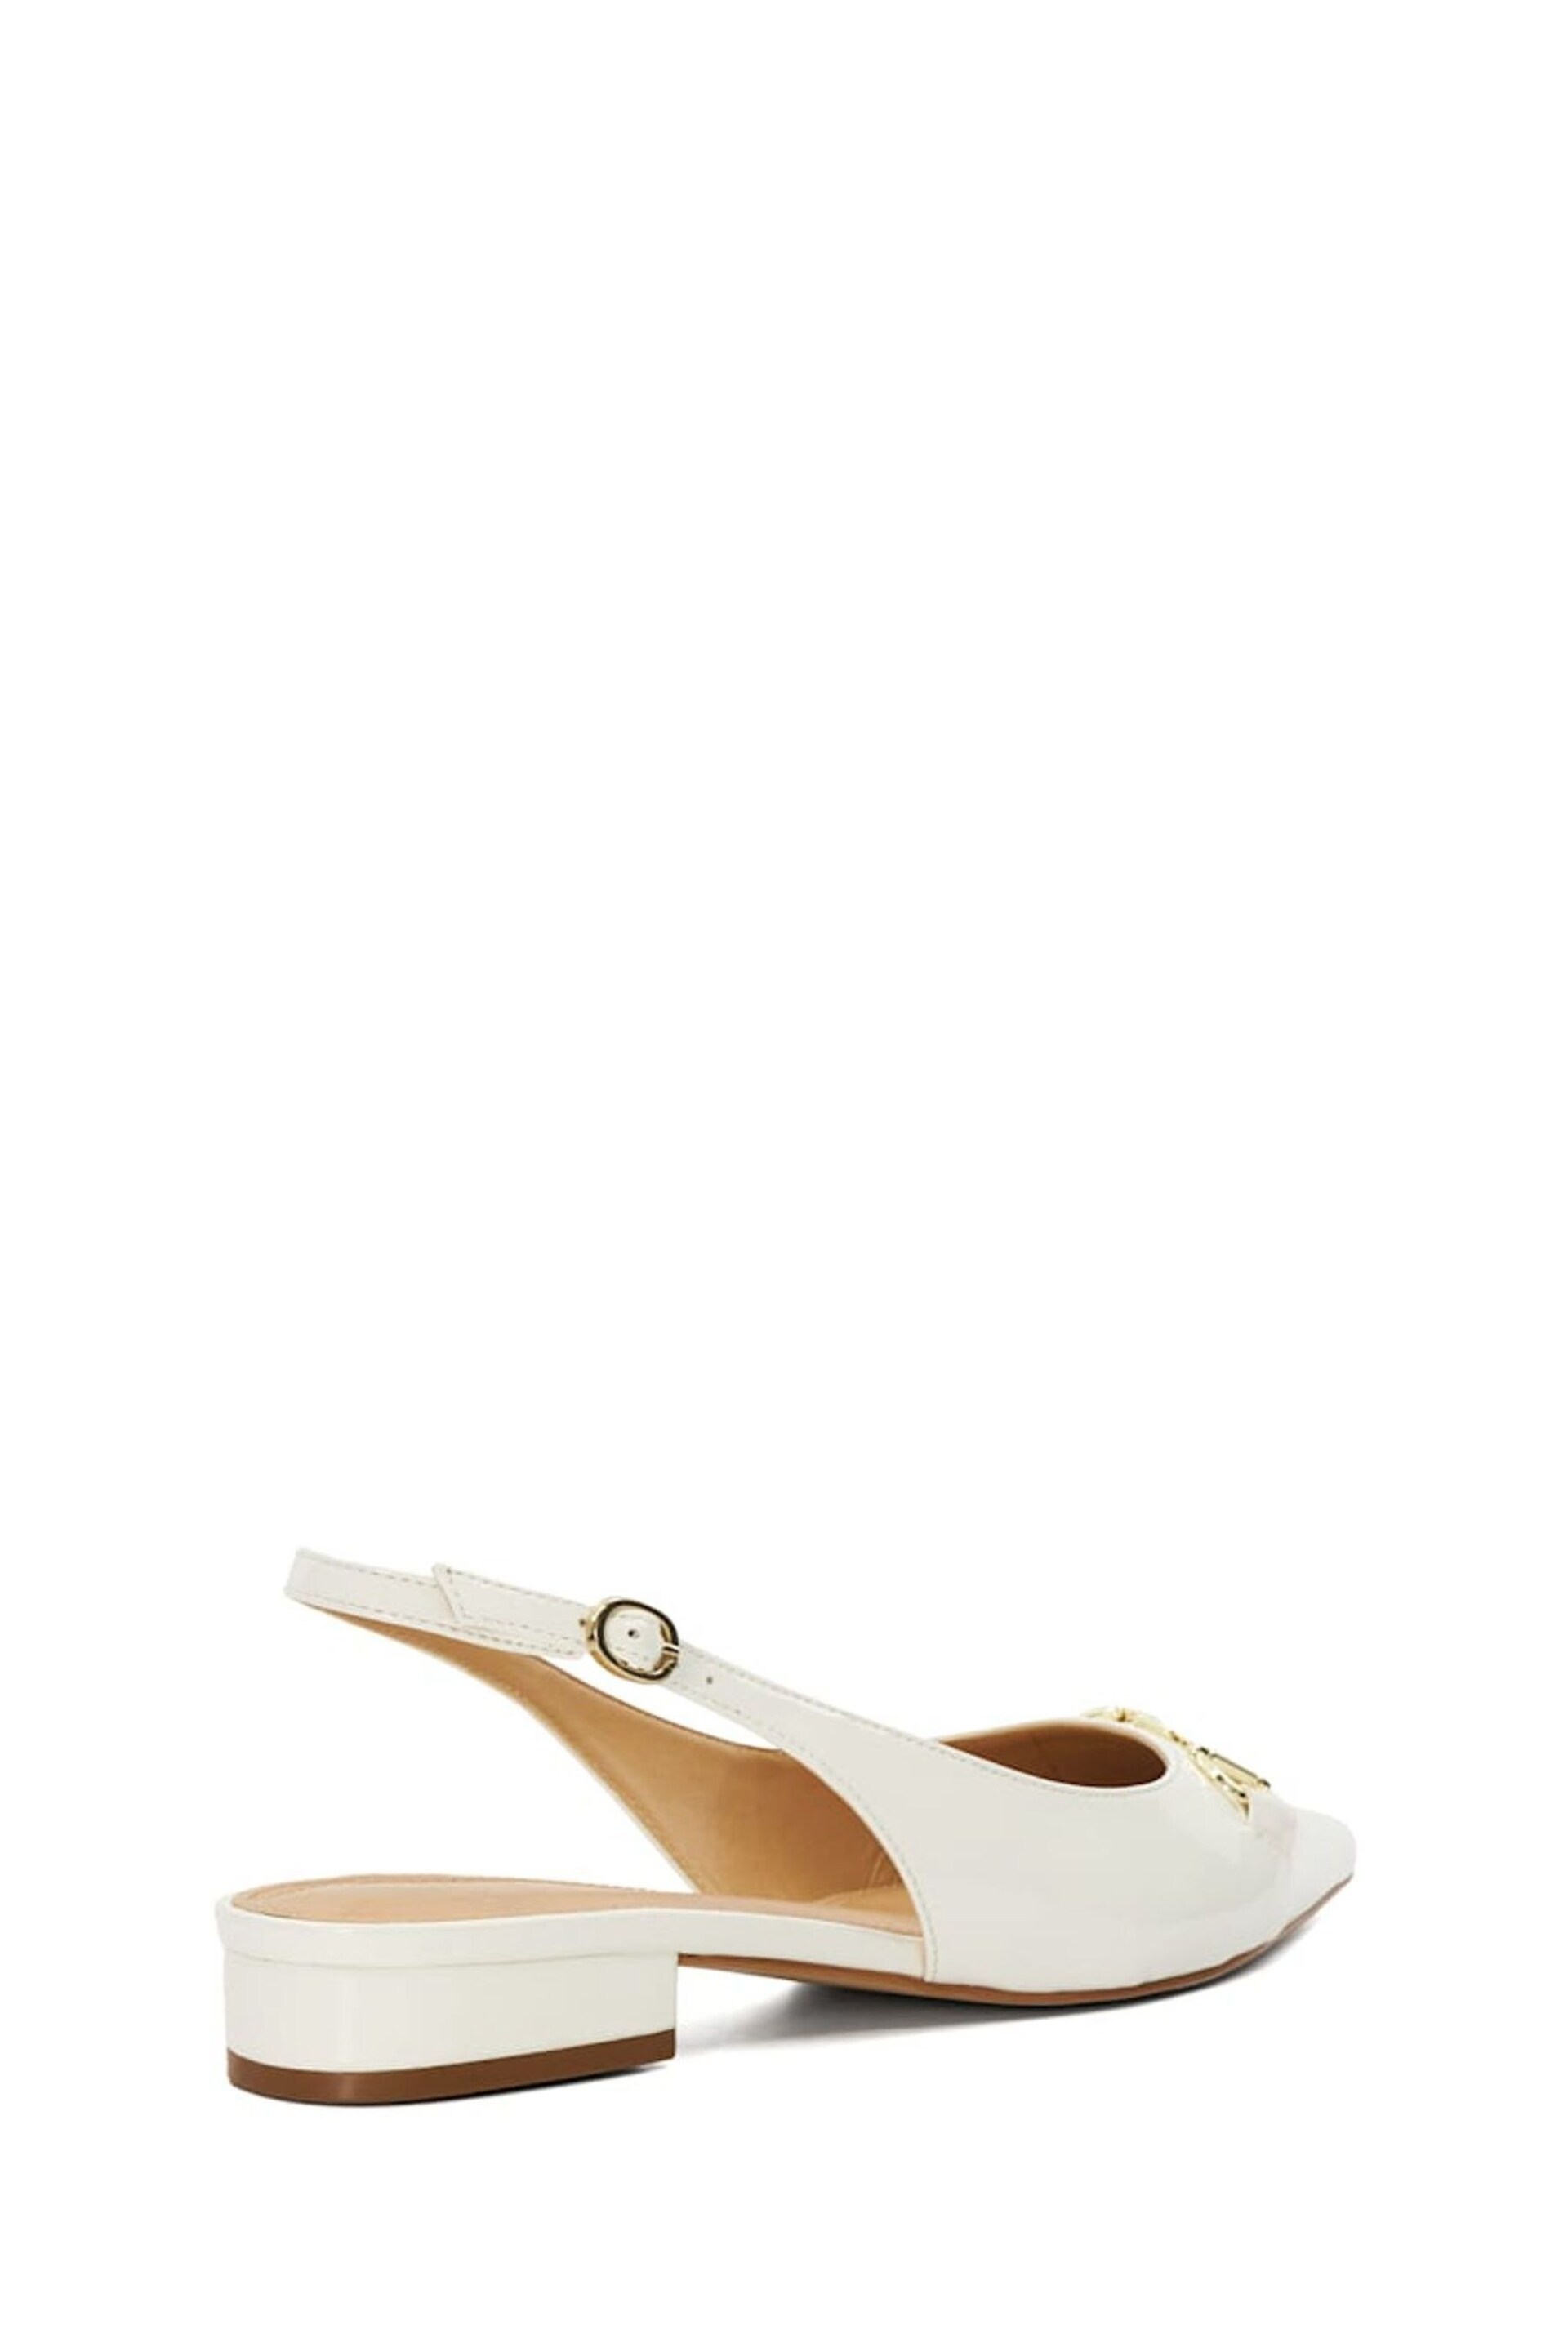 Dune London White Wide Fit Hopeful Branded-Snaffle-Trim Ballet Shoes - Image 5 of 8